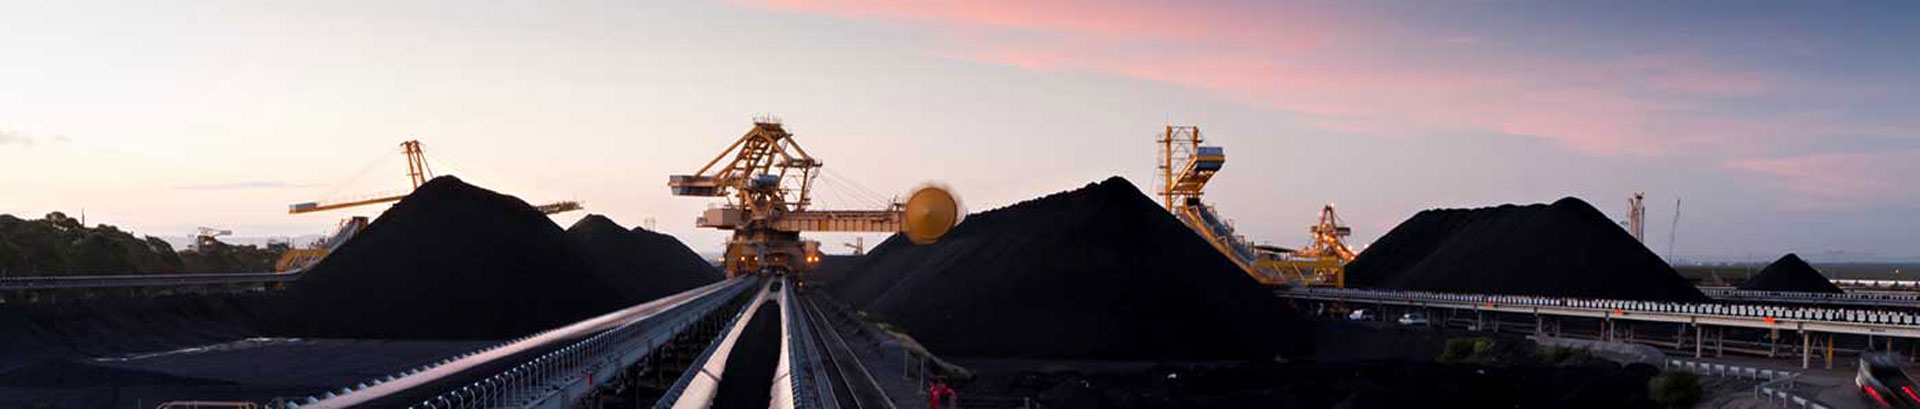 145760-bechtel-koorangang-coal-terminal-australia-mining-banner